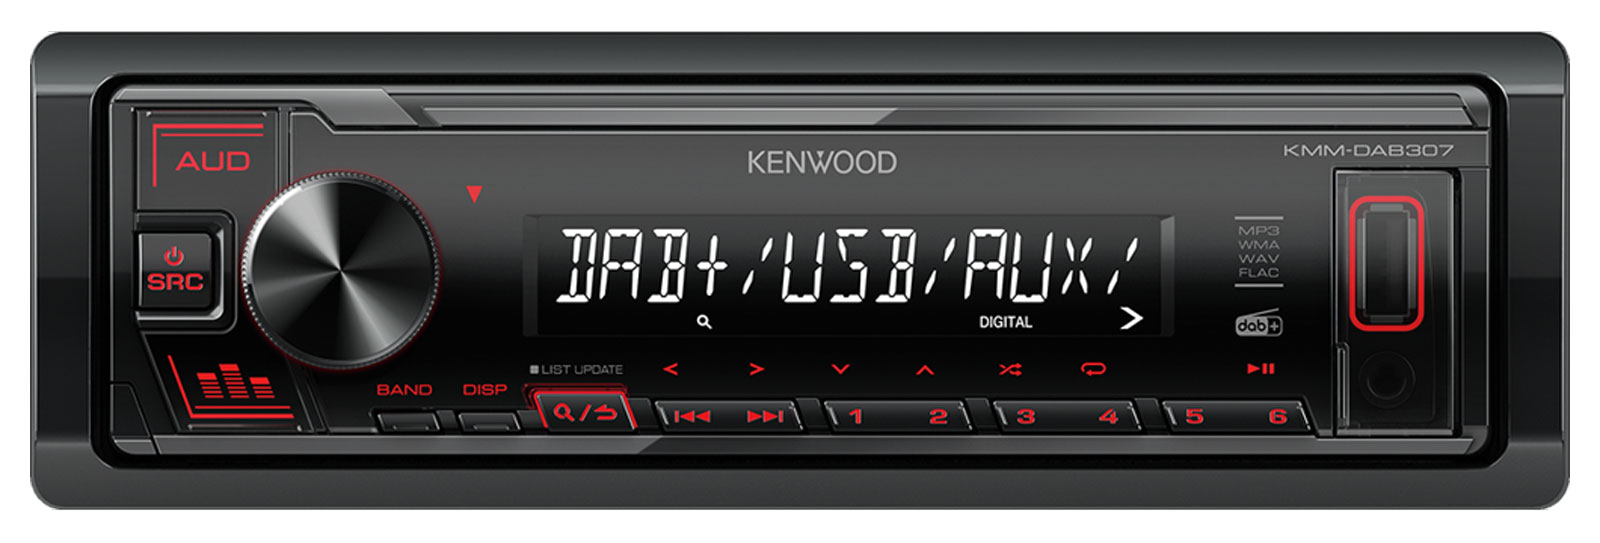 Kenwood KMM-DAB307 - MP3-Autoradio mit DAB / USB / AUX-IN